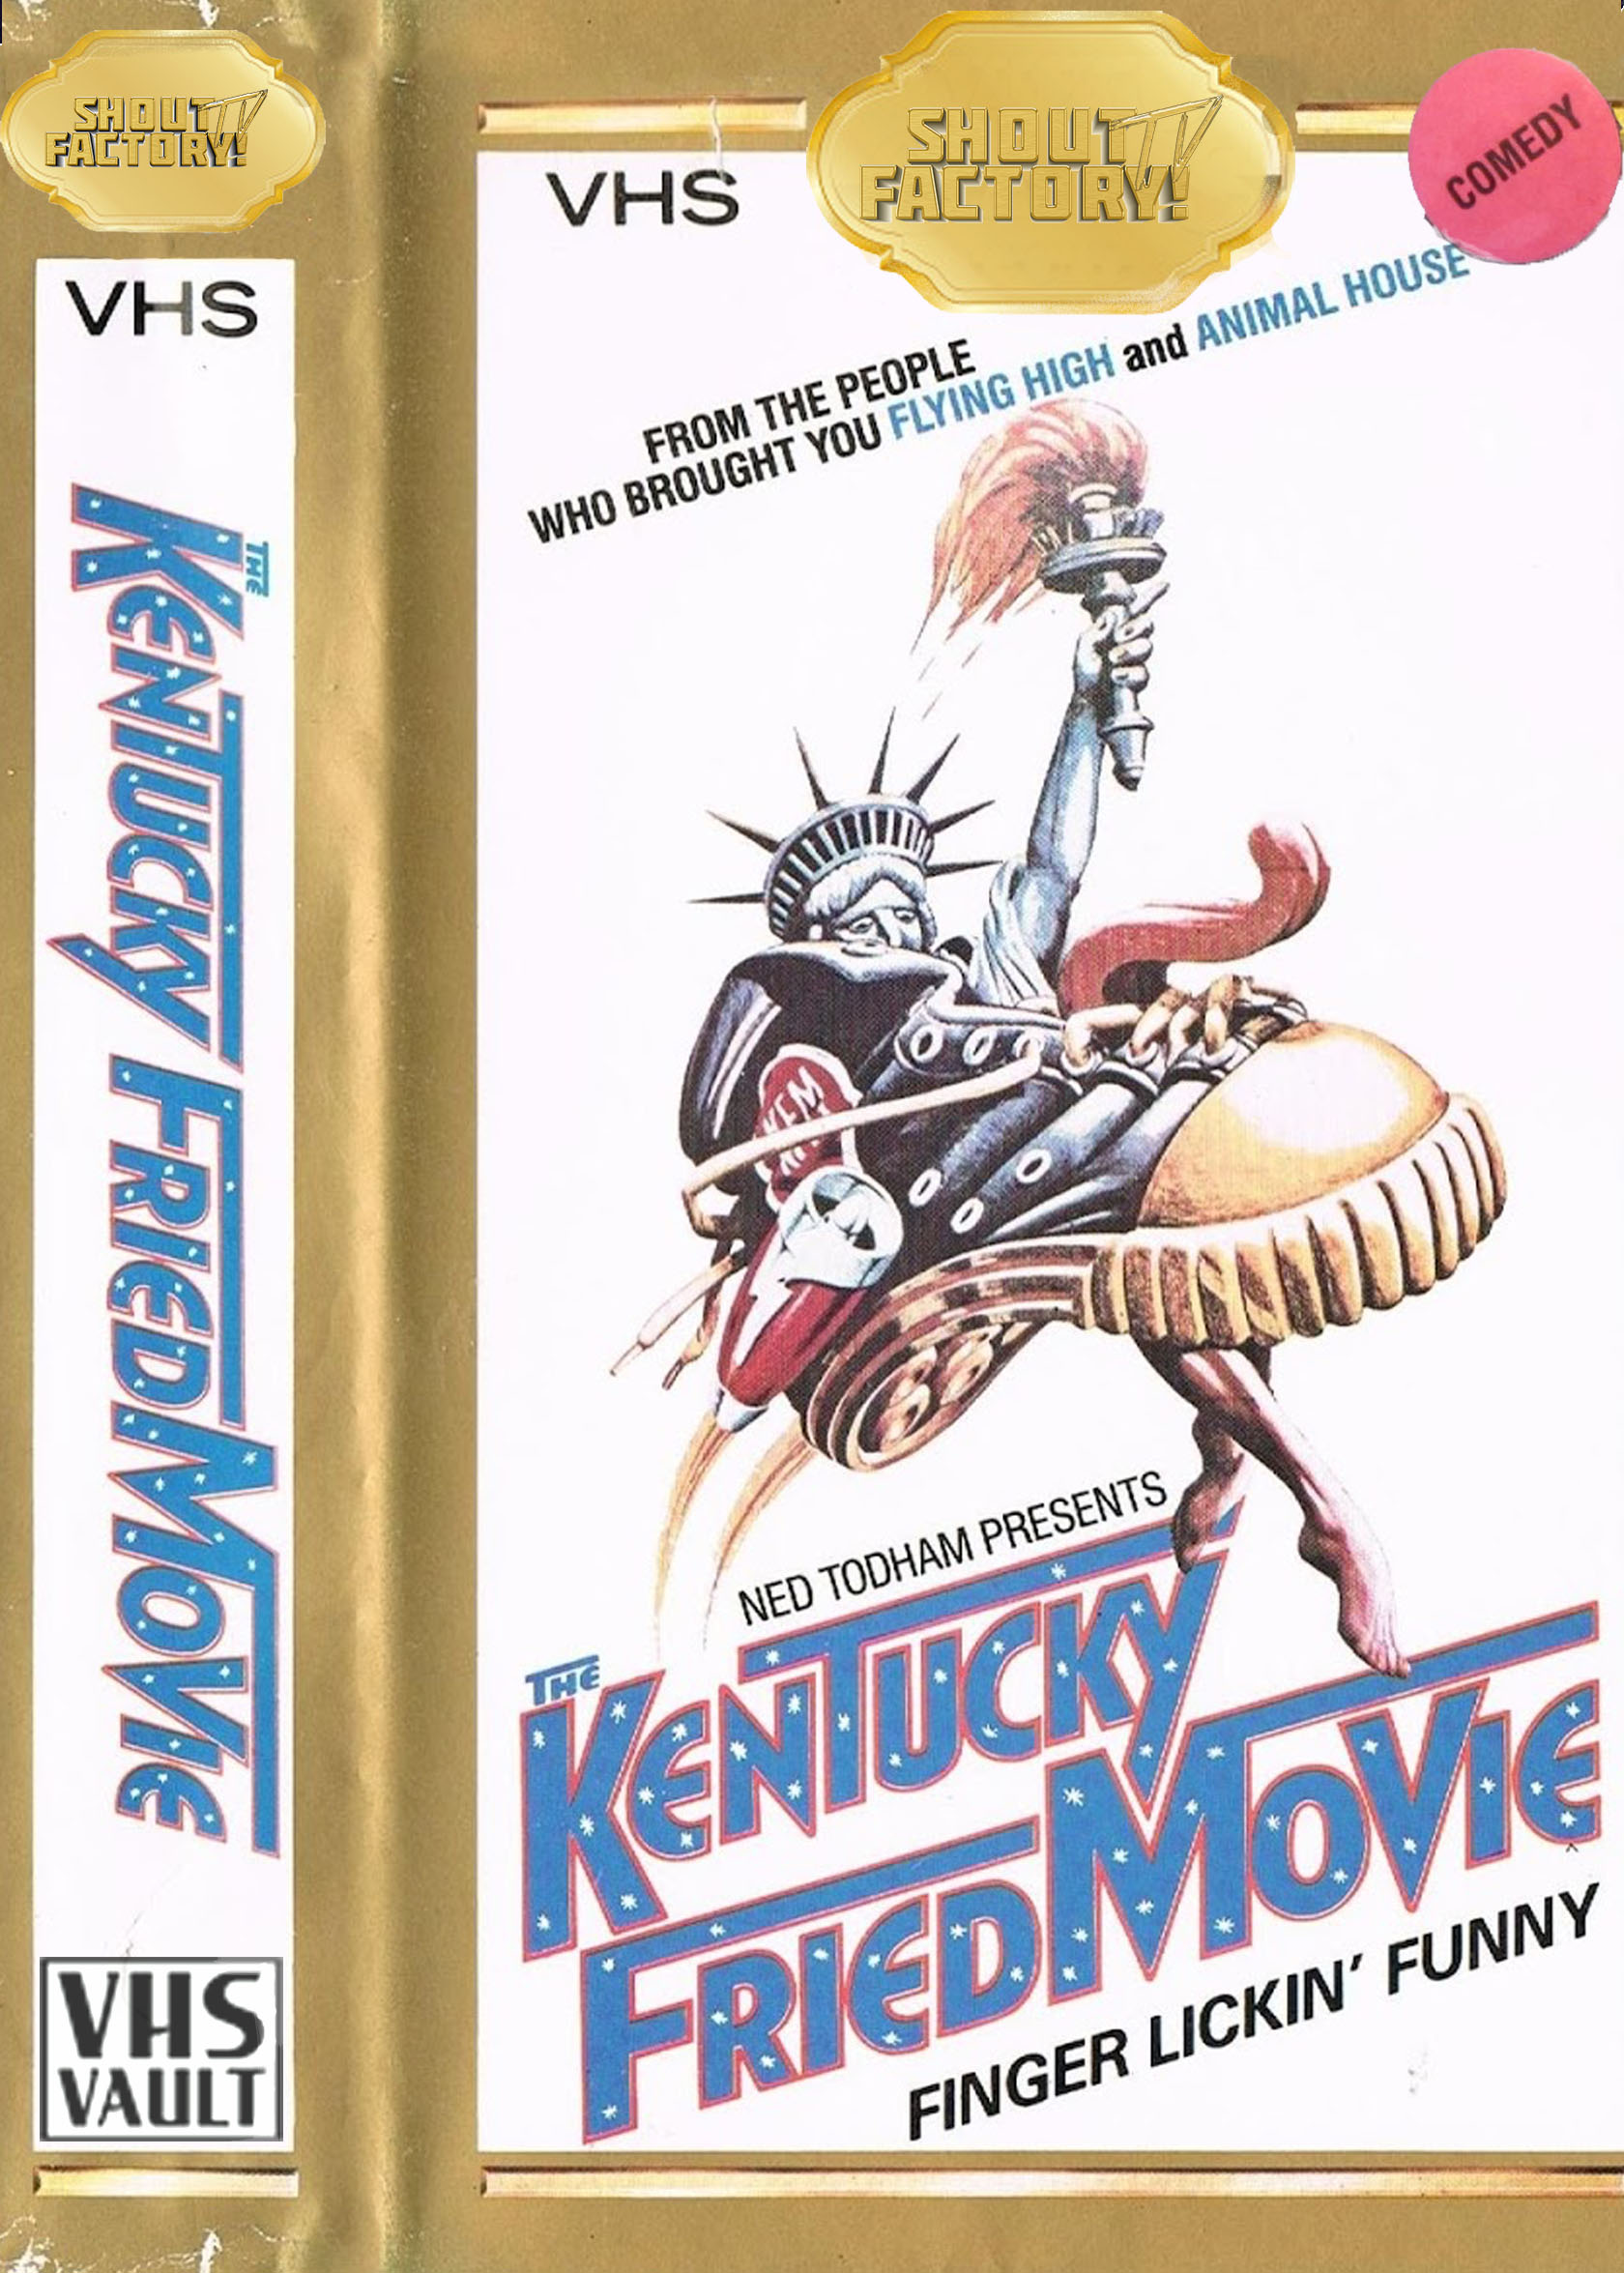 The Kentucky Fried Movie [VHS Vault]